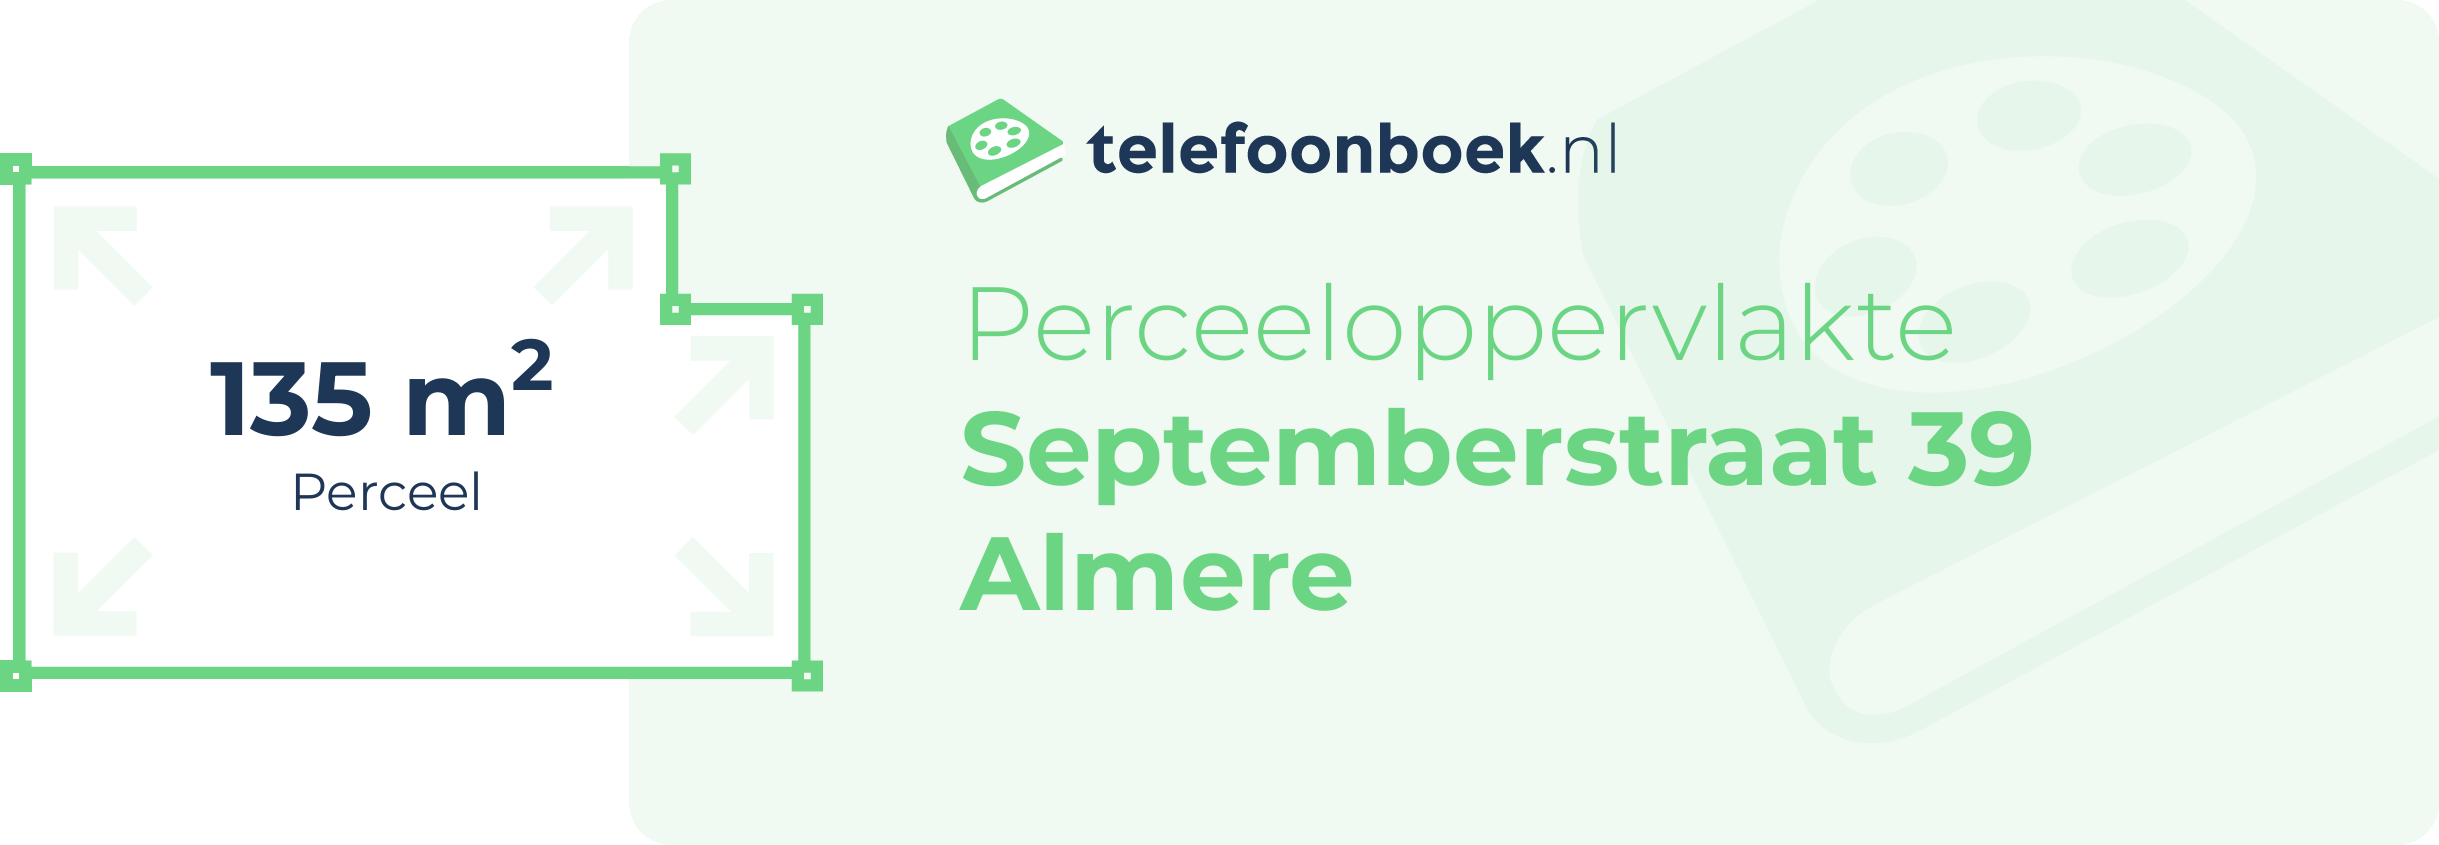 Perceeloppervlakte Septemberstraat 39 Almere